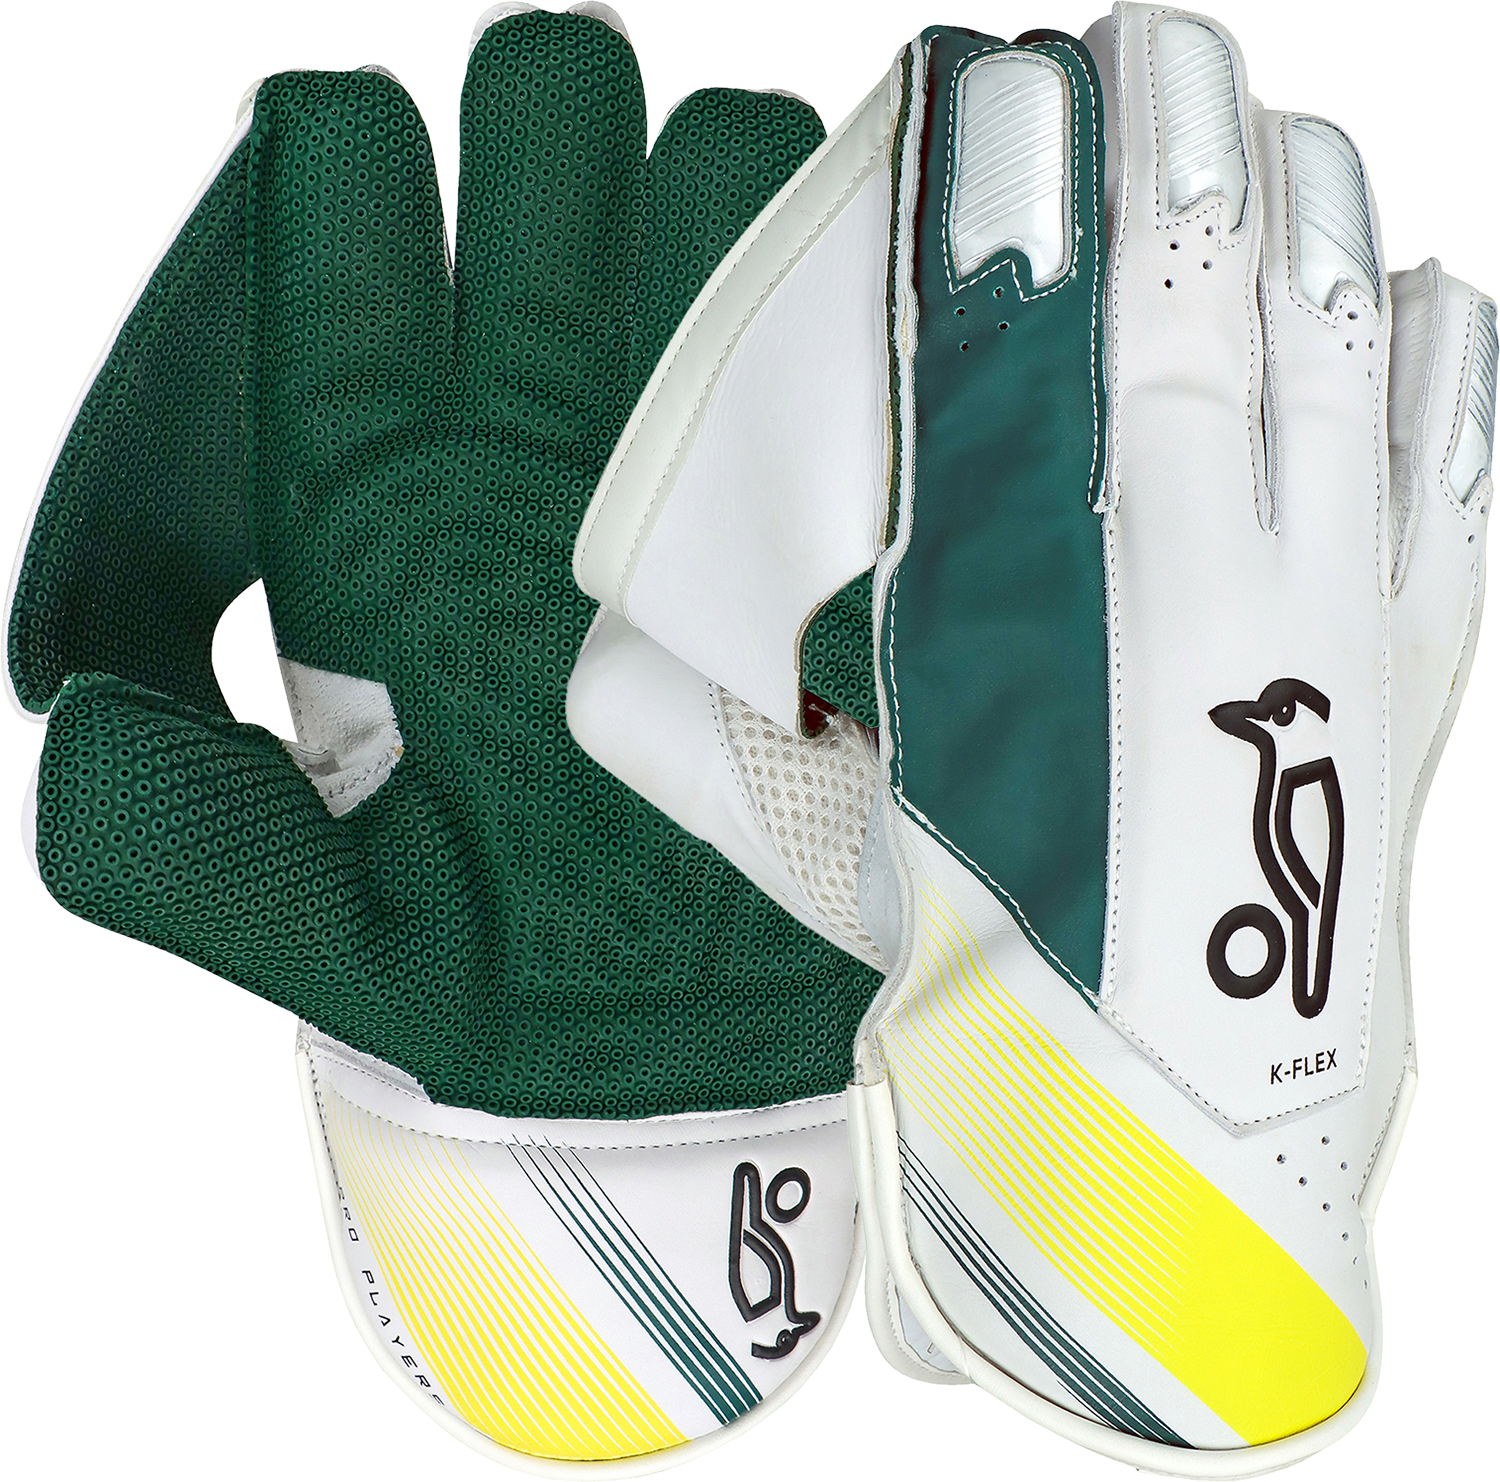 Kookaburra-Pro-Players-Wicket-Keeping-Glove